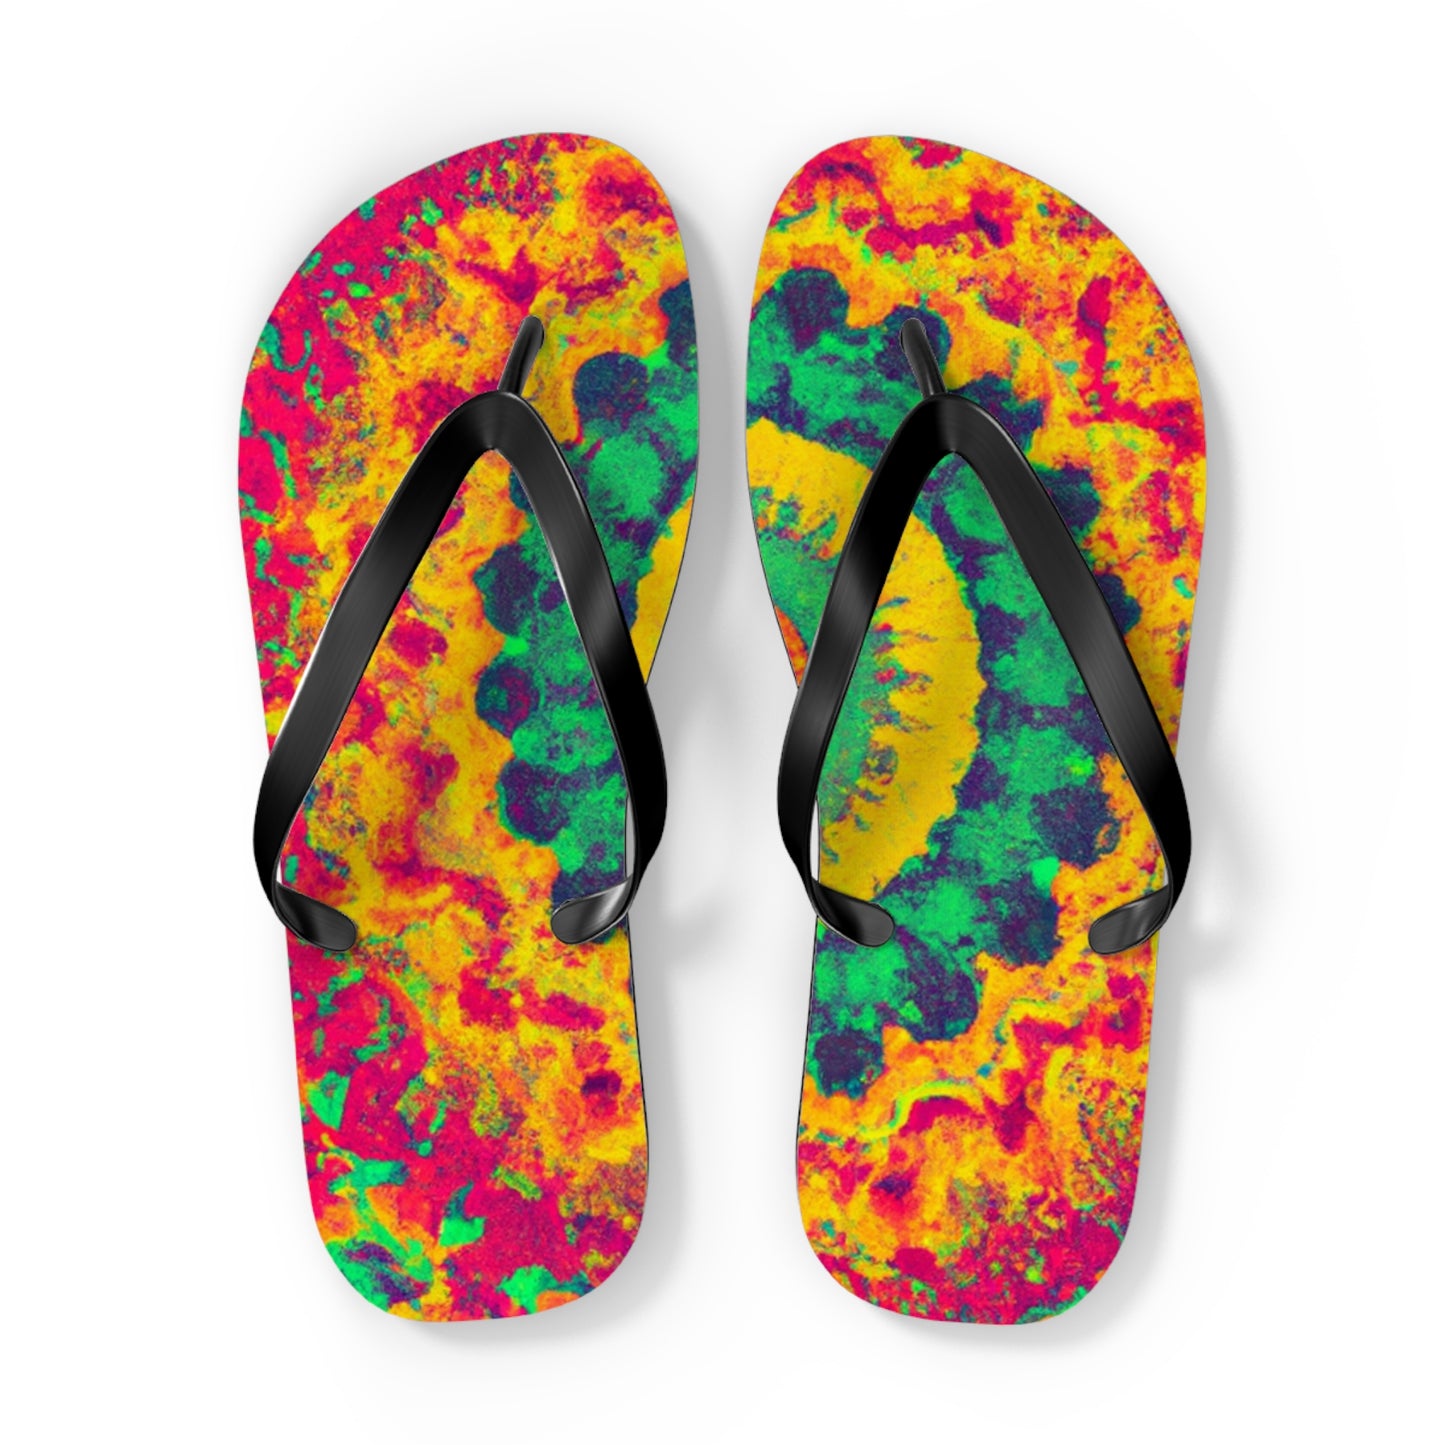 Grandma Hilda's Shoe Emporium - Psychedelic Trippy Flip Flop Beach Sandals